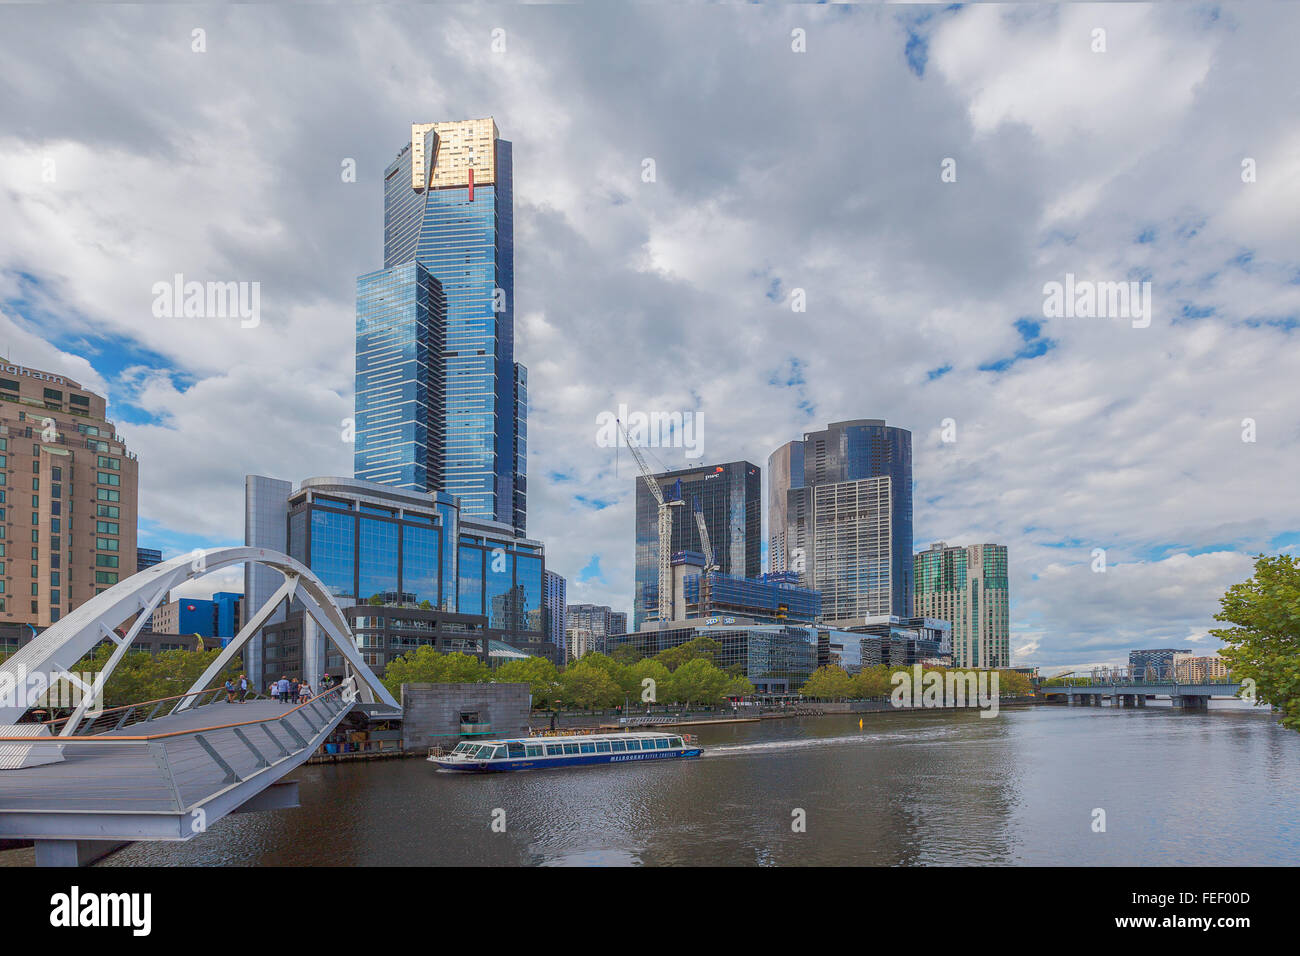 MELBOURNE - JAN 31 2016: View of Yarra river, Eureka Tower, Southbank footbridge, and Melbourne river cruises boat. Stock Photo